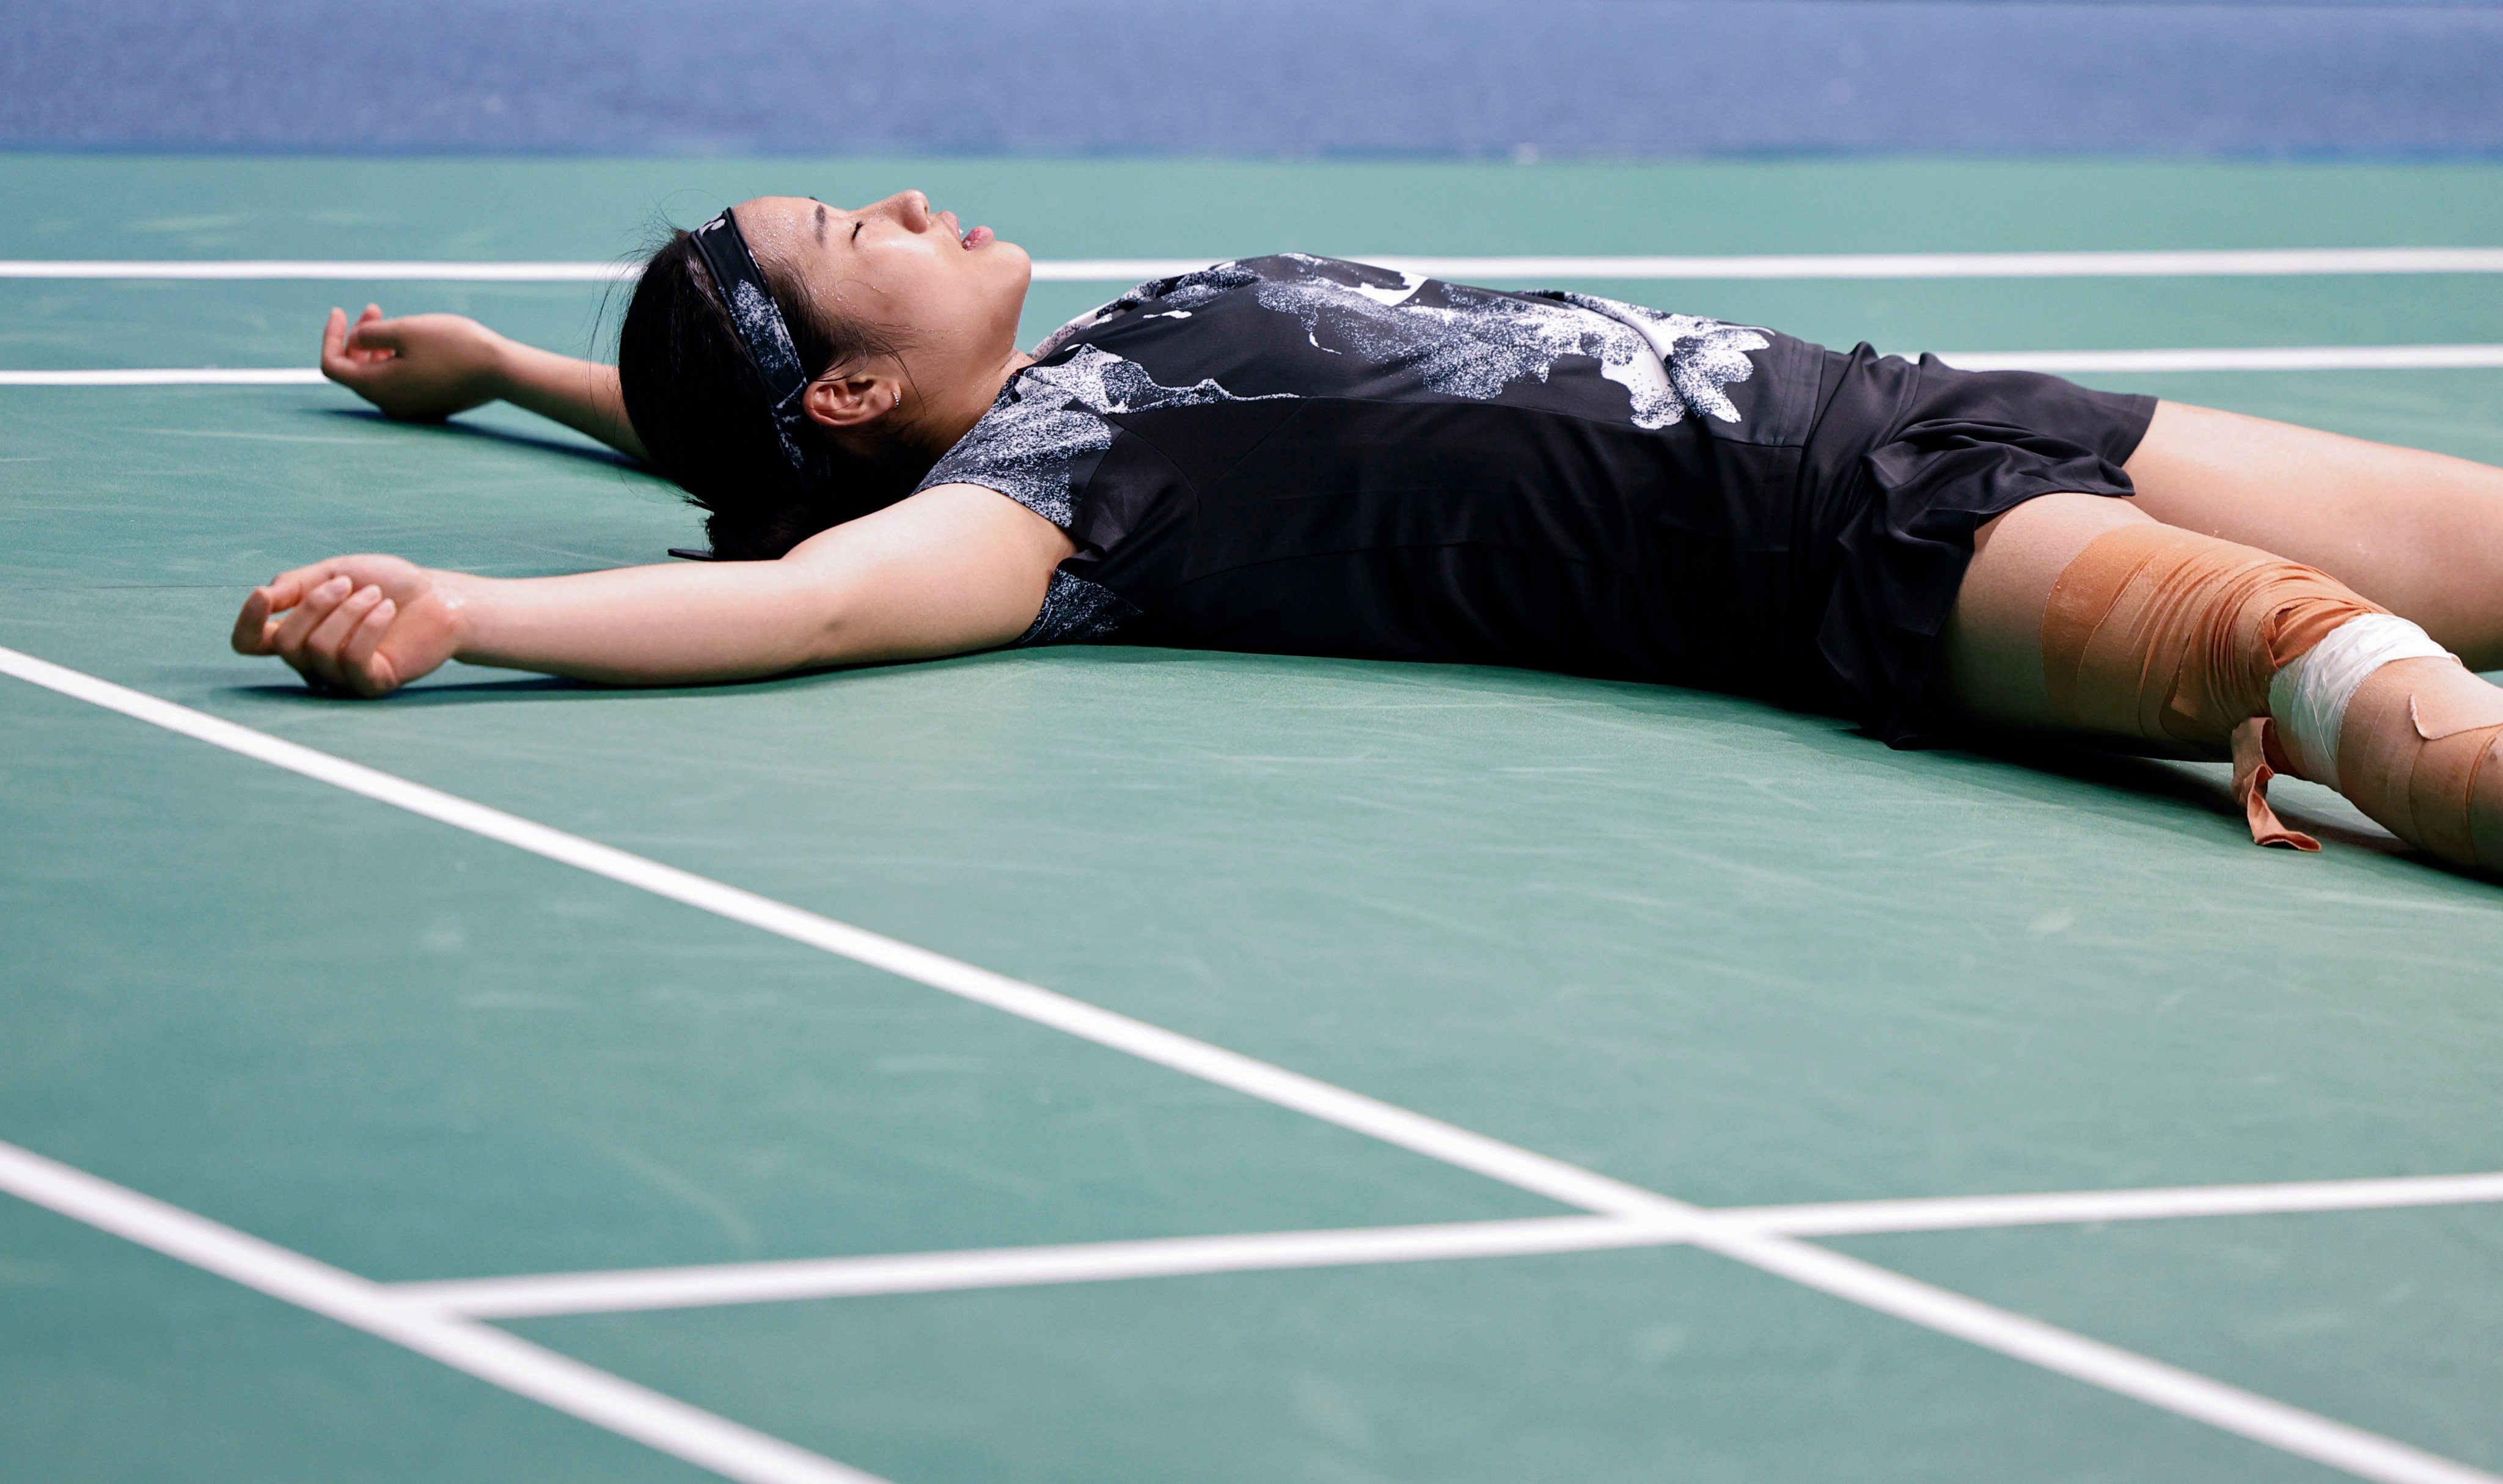 An Se-young of South Korea is exhausted after clinching women’s singles badminton gold in Hangzhou. Photo: Xinhua